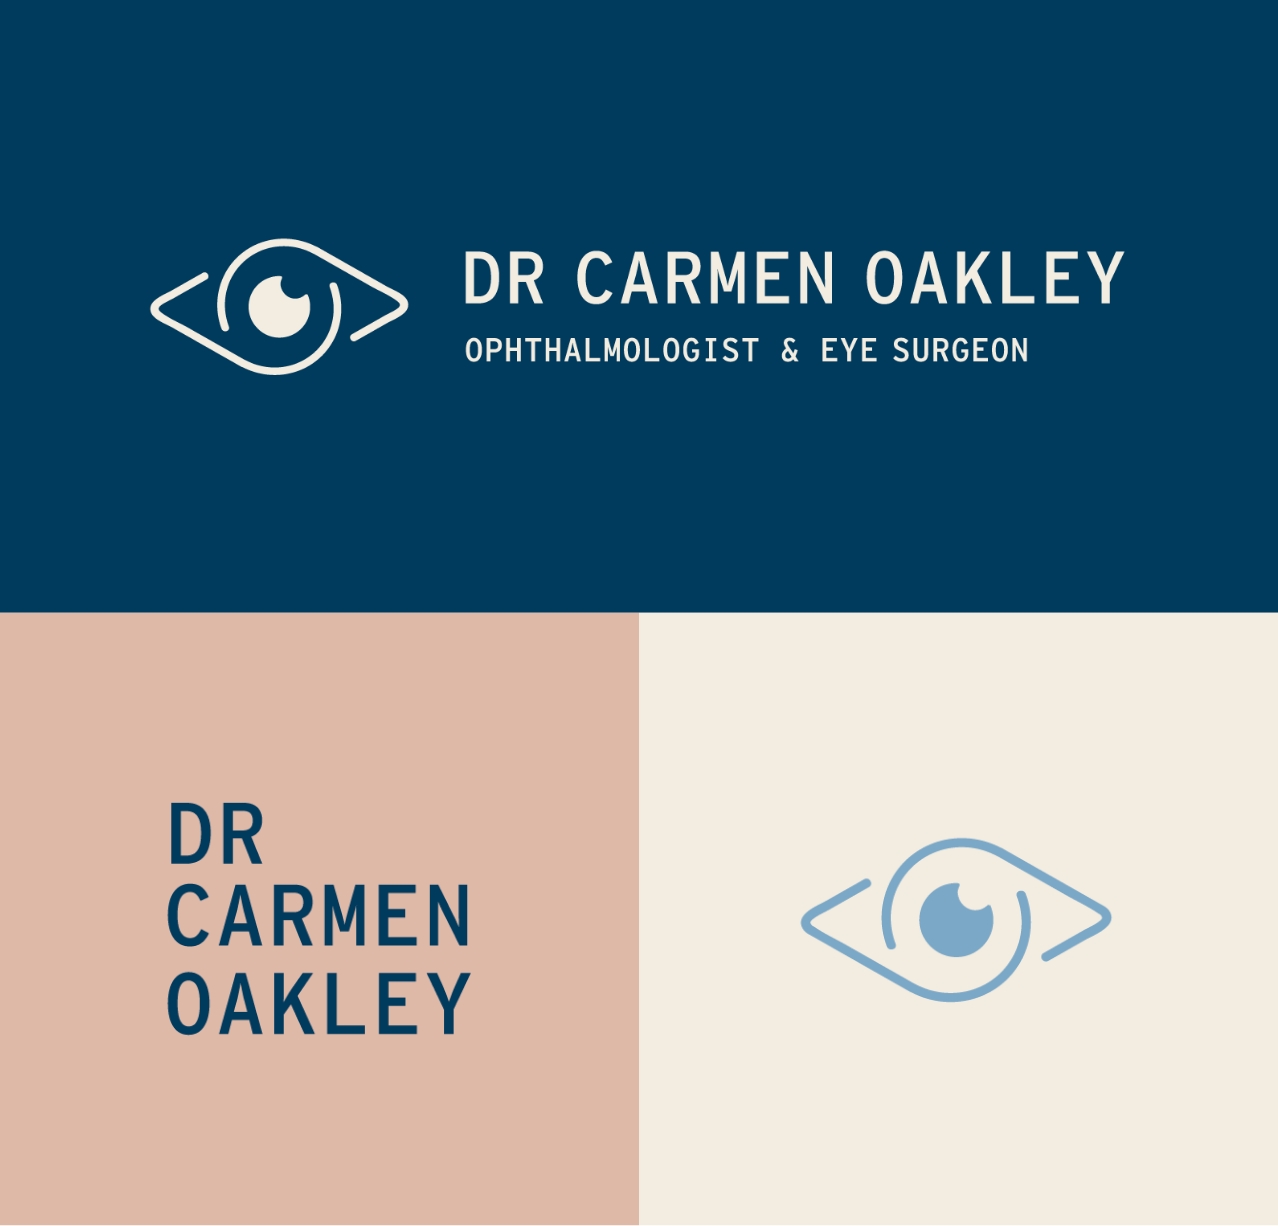 Dr Carmen Oakley – Visual Assets